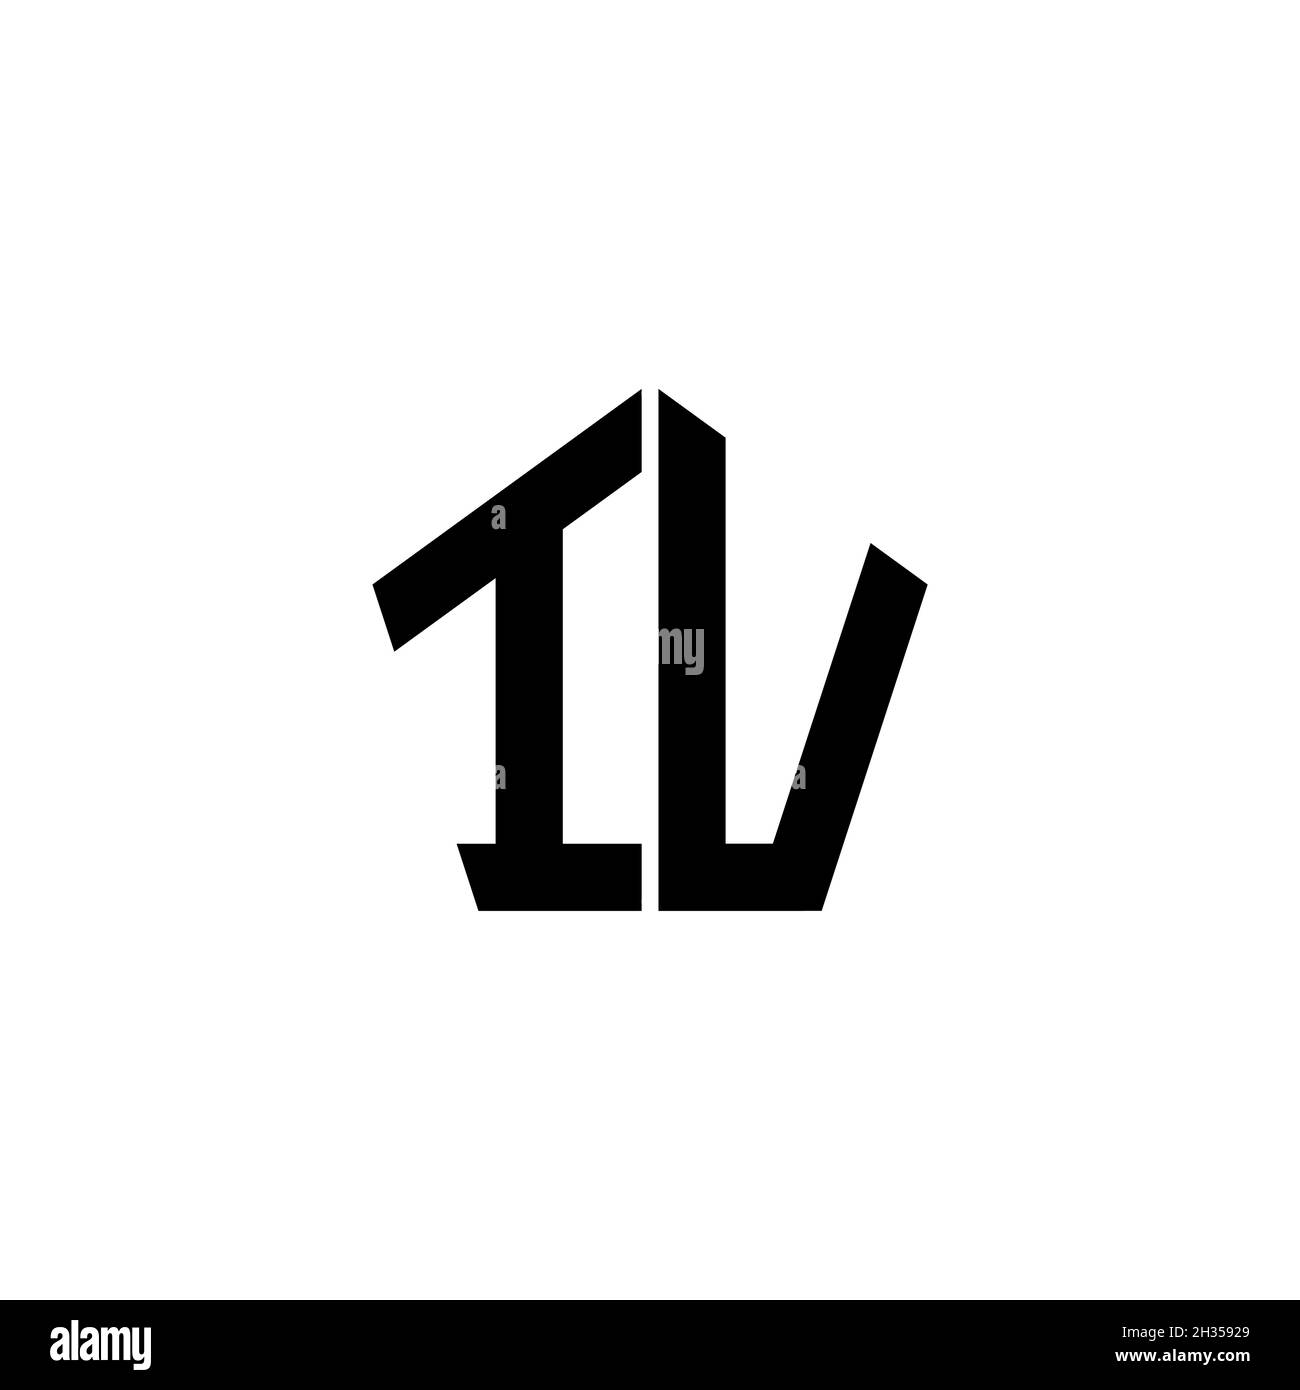 IU Monogram logo letter with polygonal geometric shape style design isolated on white background. Star polygonal, shield star geometric. Stock Vector